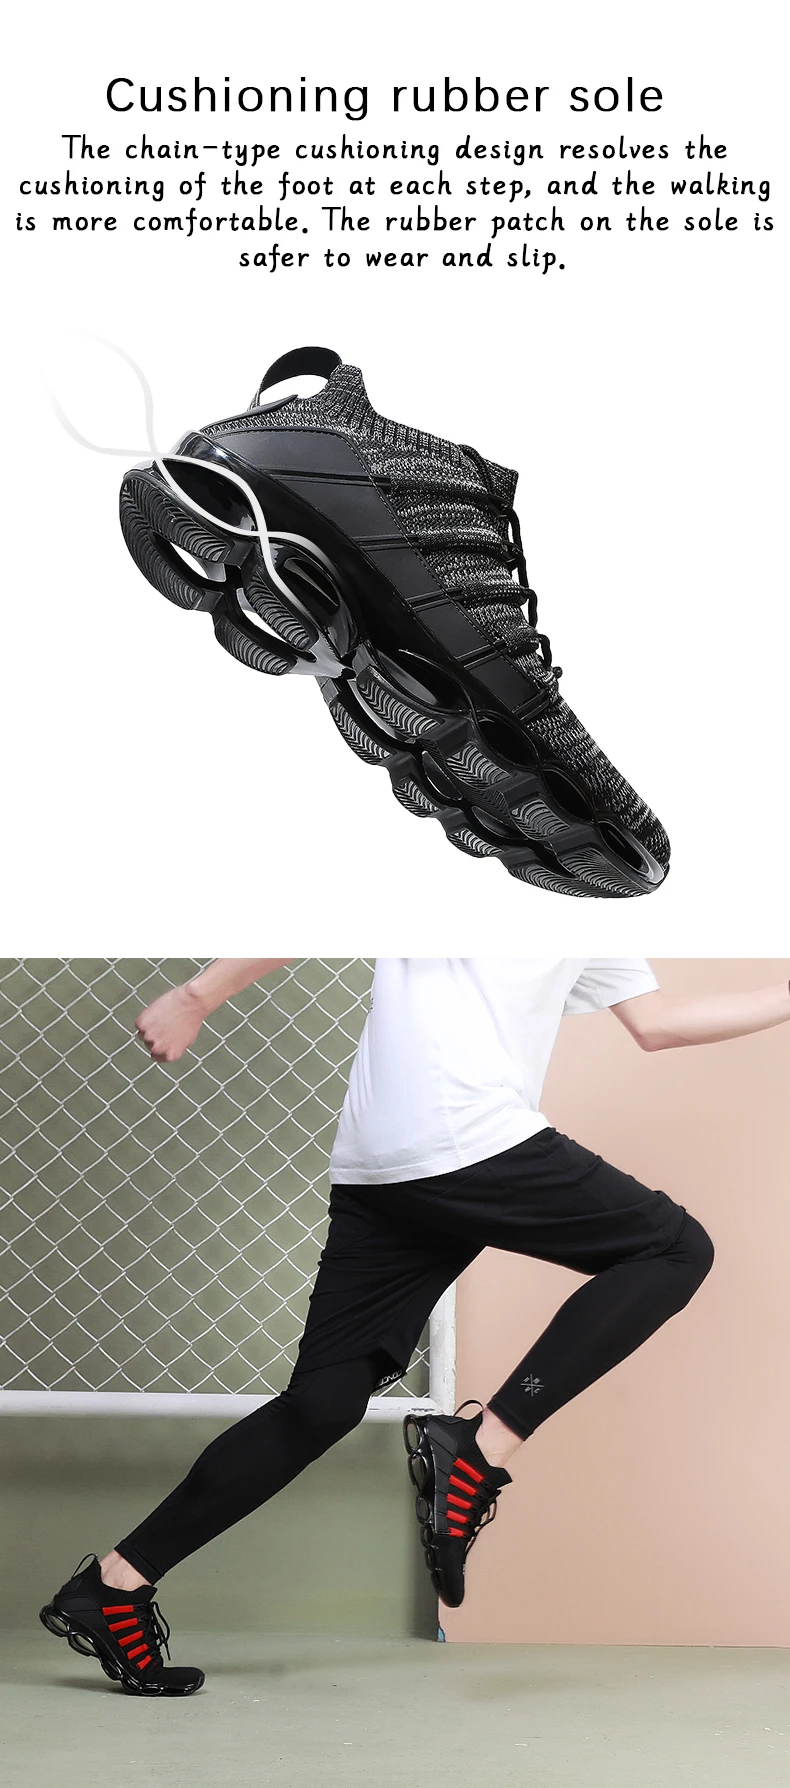 Damyuan 2020 Winter Hot Selling Fashion Comfortable Flying Weaving Man Sneakers Shock Absorbing Elevating Leisure Running Shoes